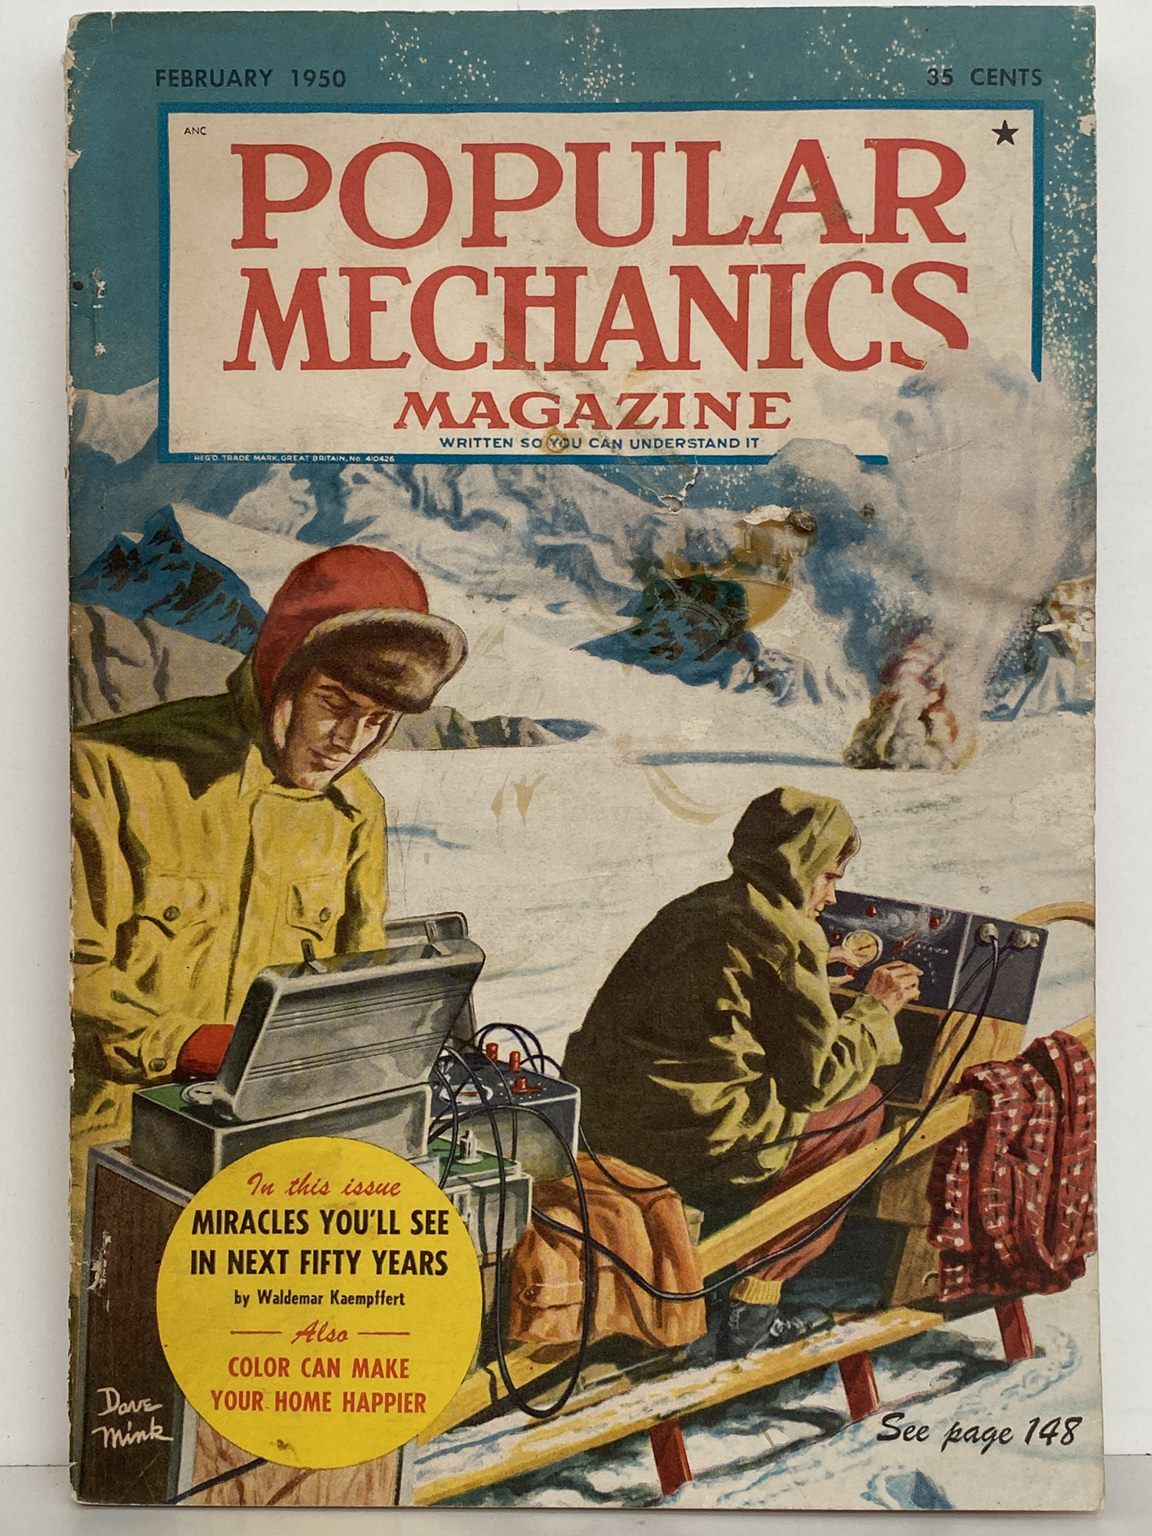 VINTAGE MAGAZINE: Popular Mechanics - Vol. 93, No. 3 - February 1950